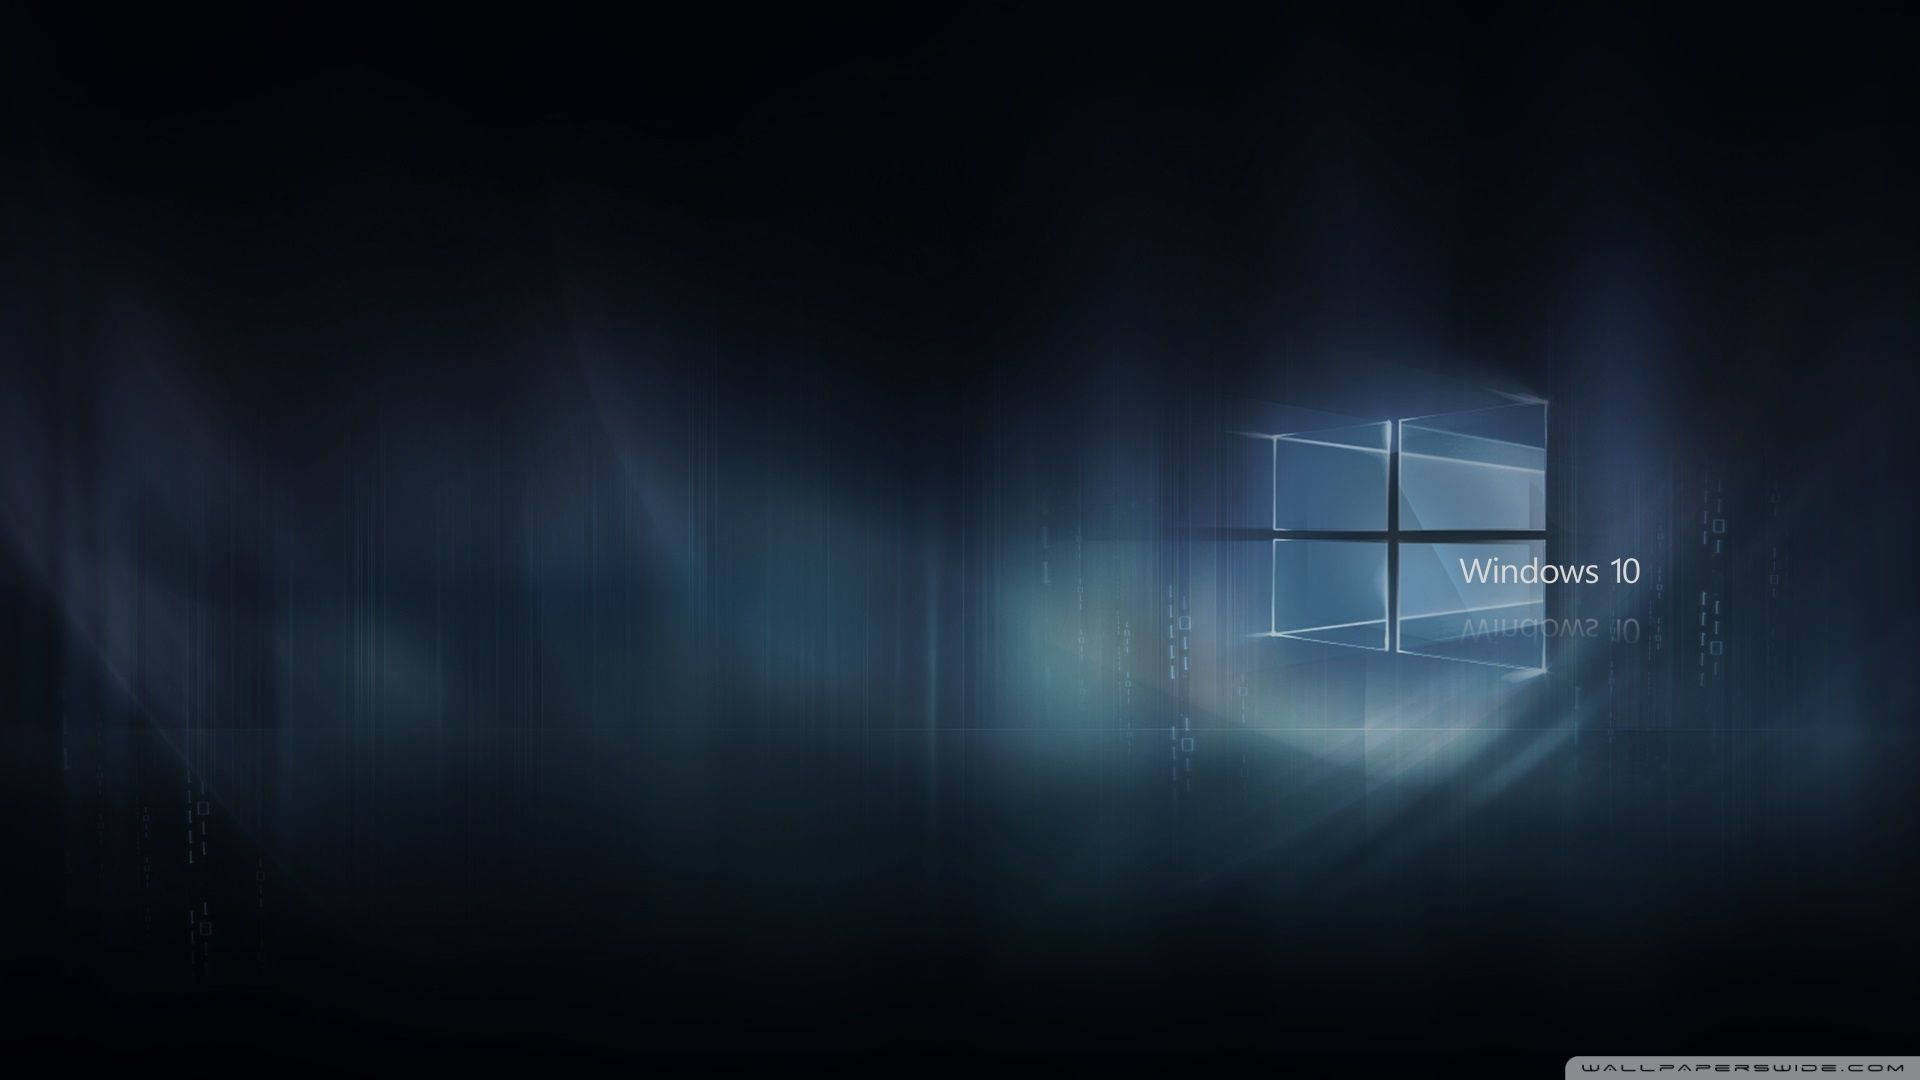 Smoky Windows 10 Hd Logo Wallpaper